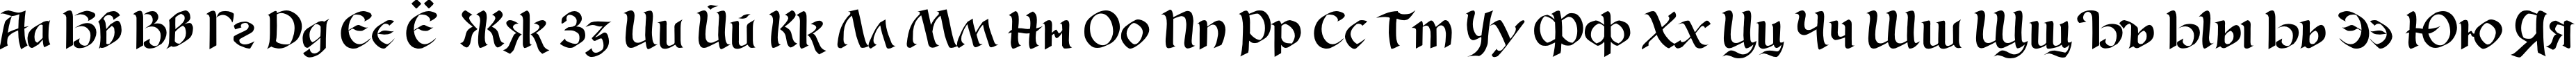 Пример написания русского алфавита шрифтом Vikant TYGRA